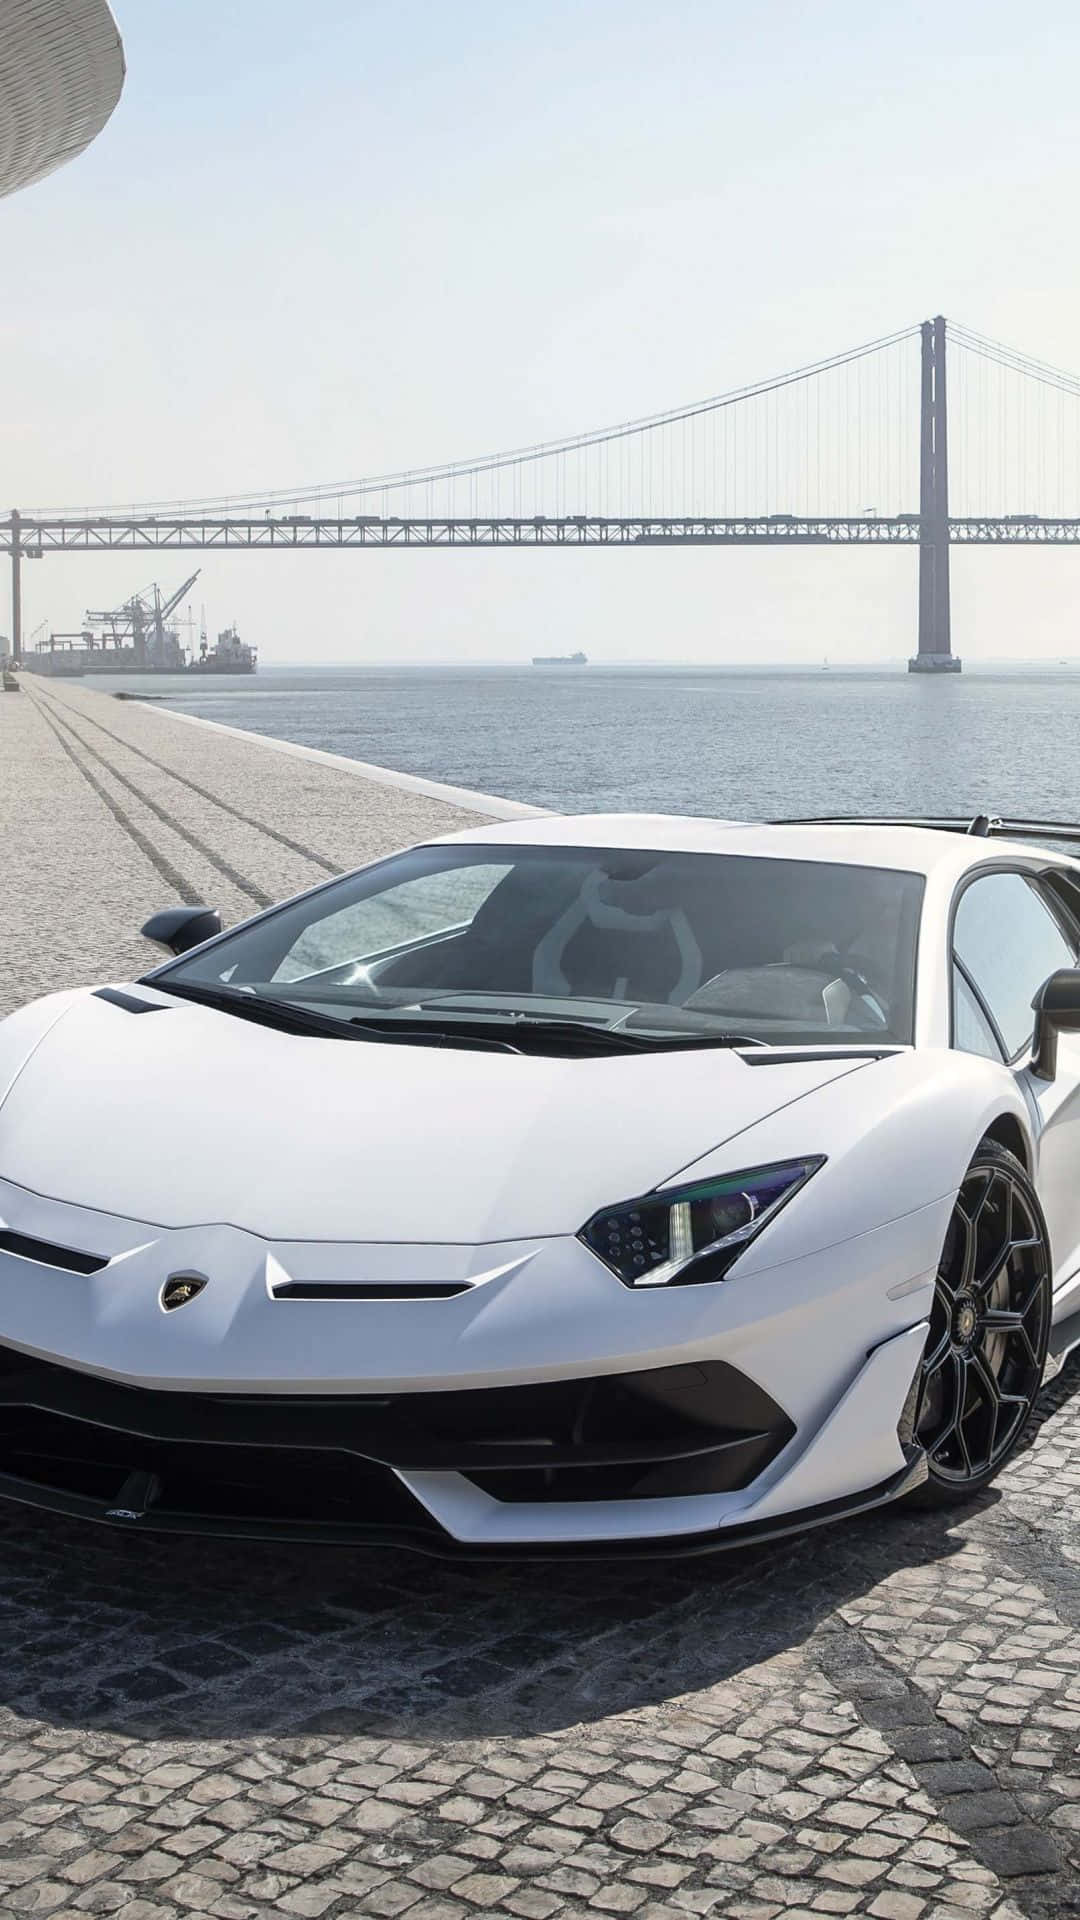 Capture the Moment with the Lamborghini Venevo Phone Wallpaper